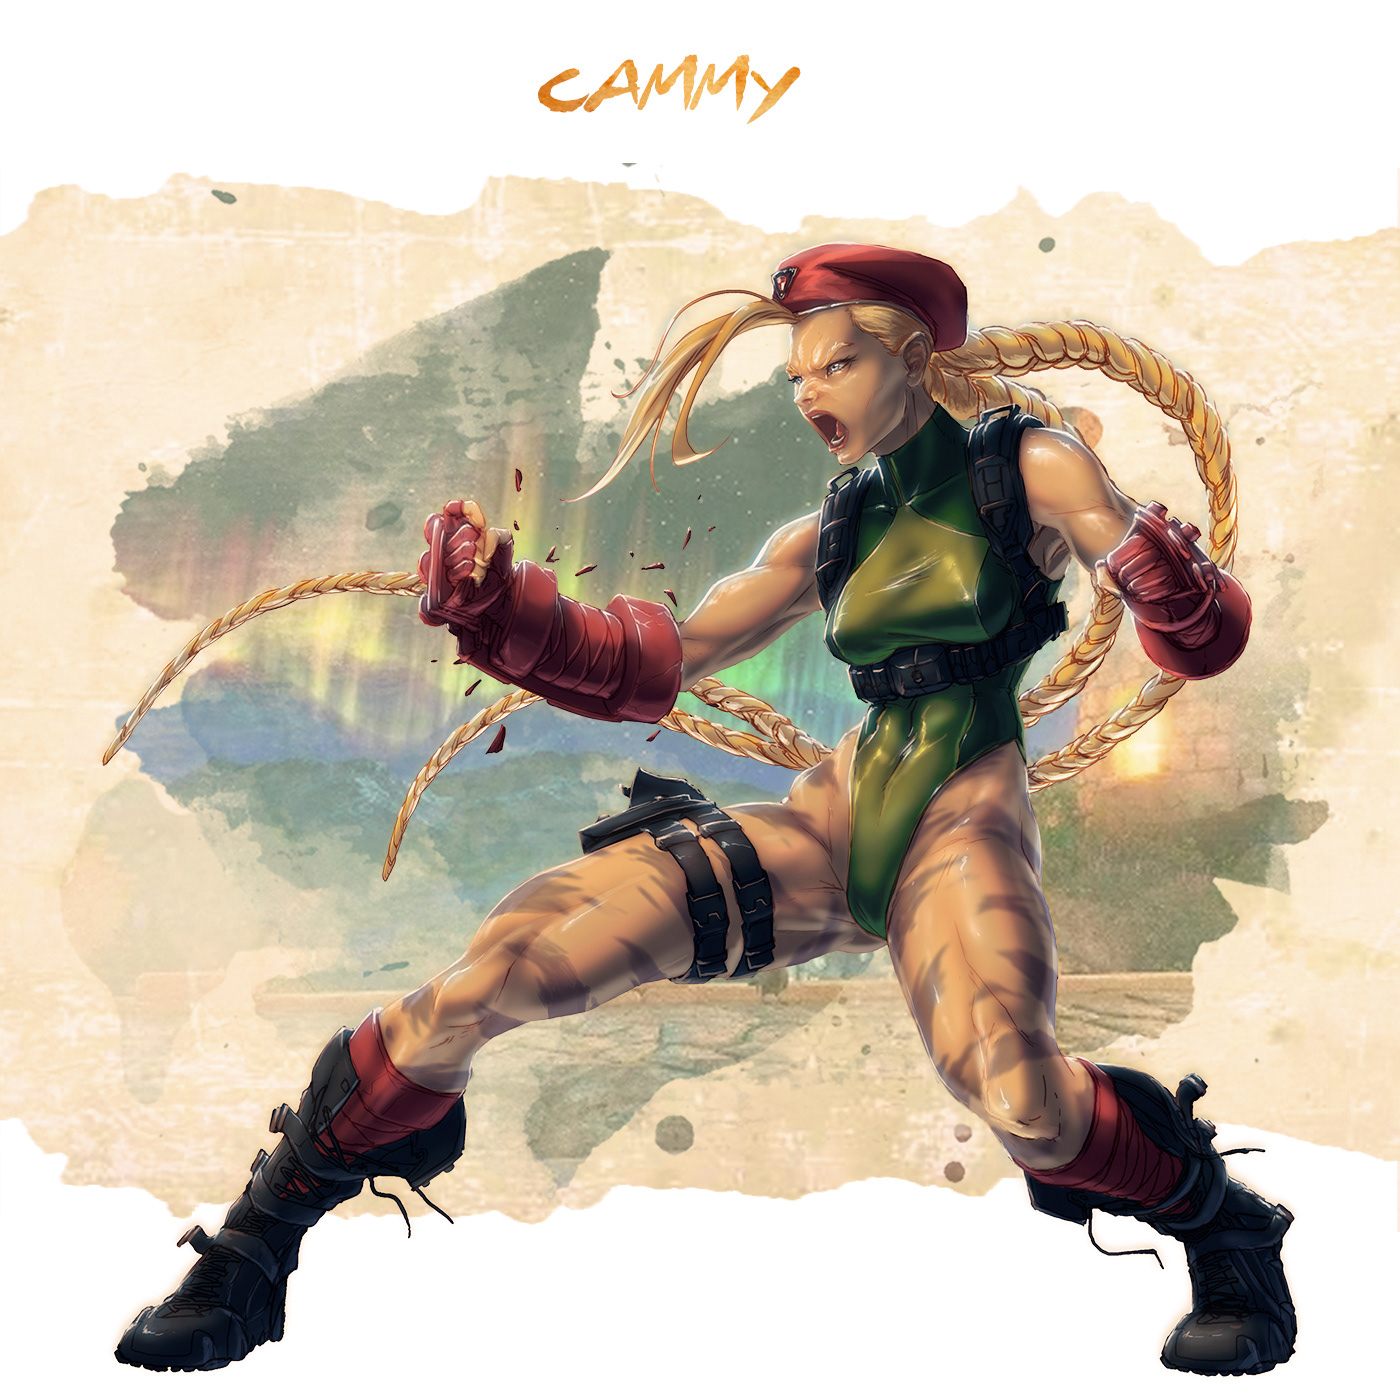 Cammy / Street Fighter on Behance